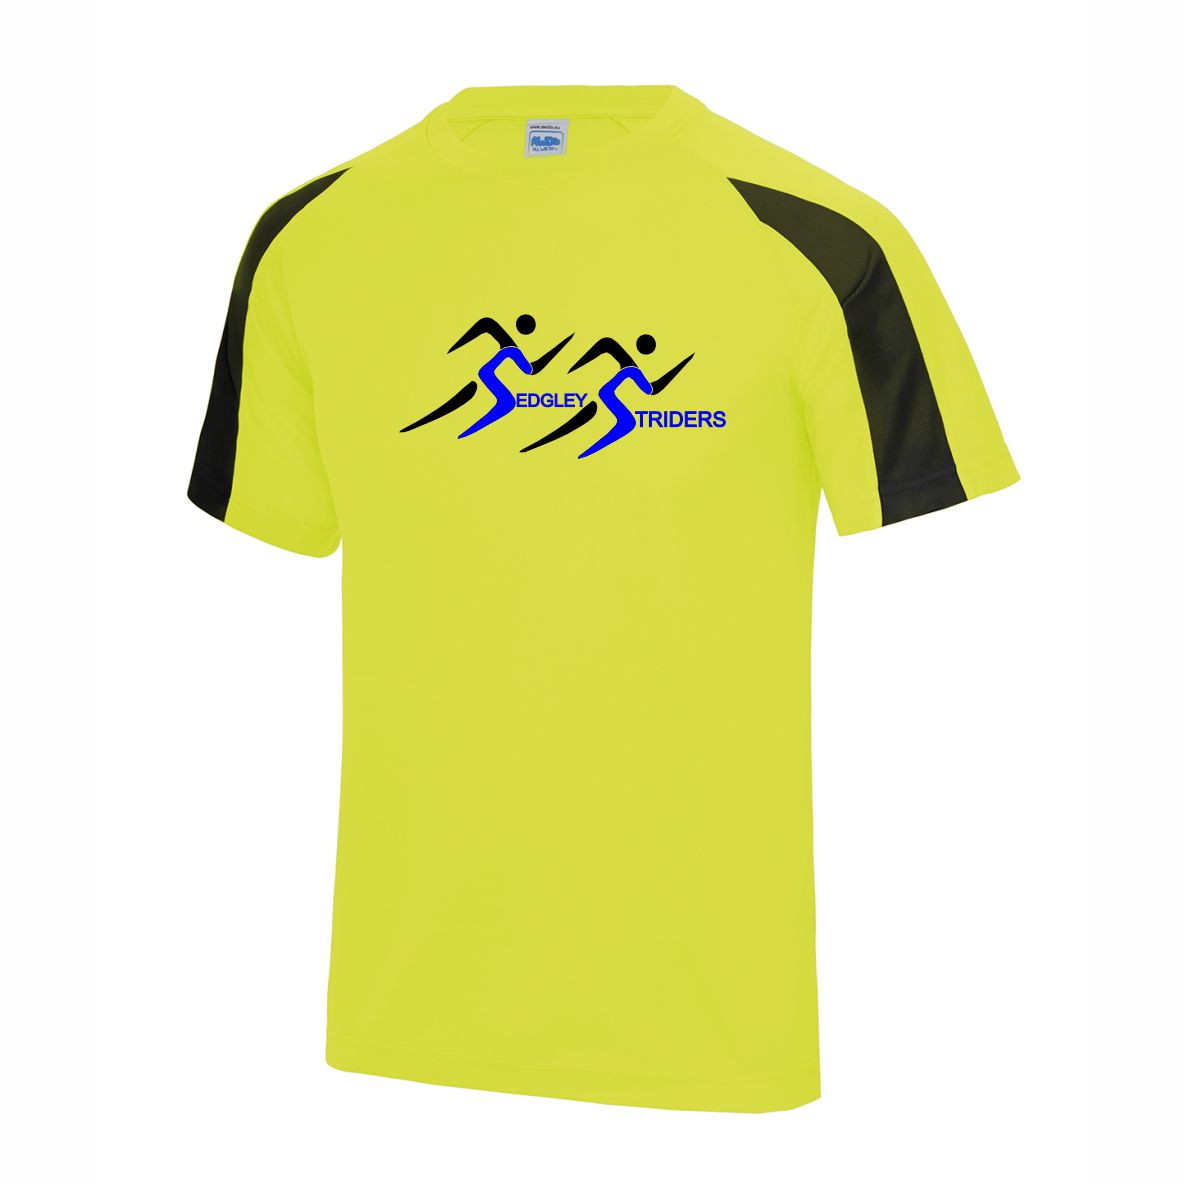 Sedgley Striders -Short Sleeve T-Shirt [JC003]